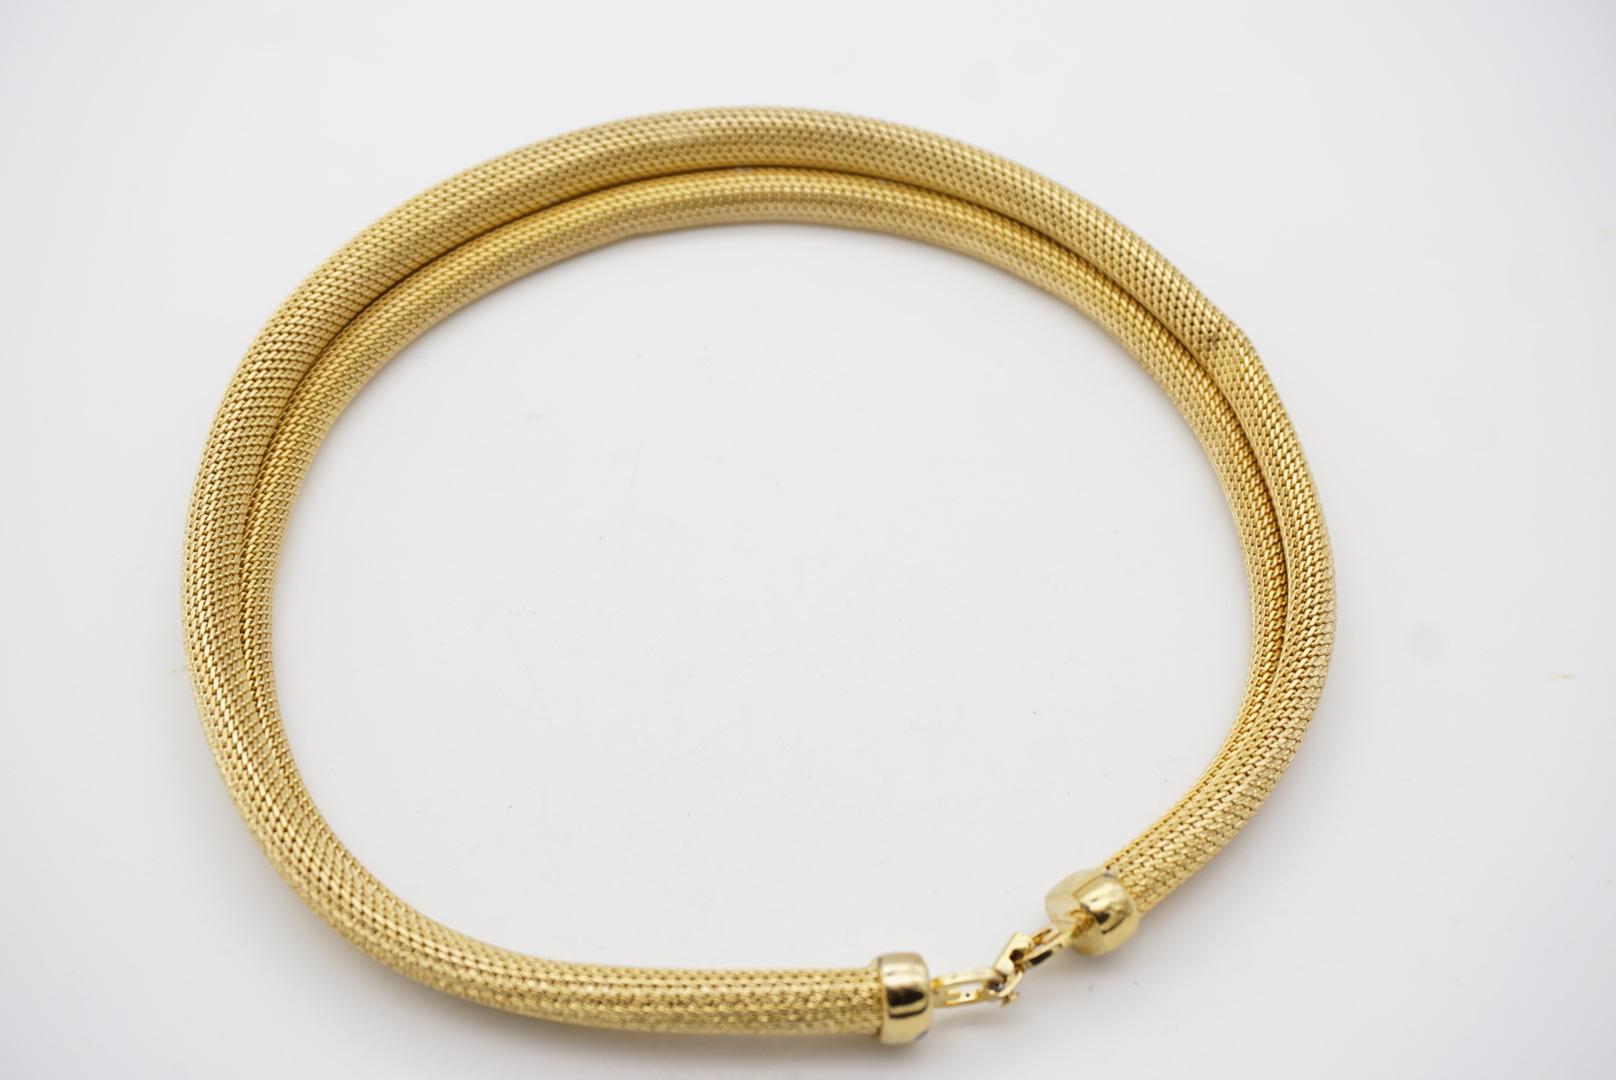 Christian Dior GROSSE 1970s Vintage Mesh Weave Snake Omega Chunky Gold Necklace For Sale 7